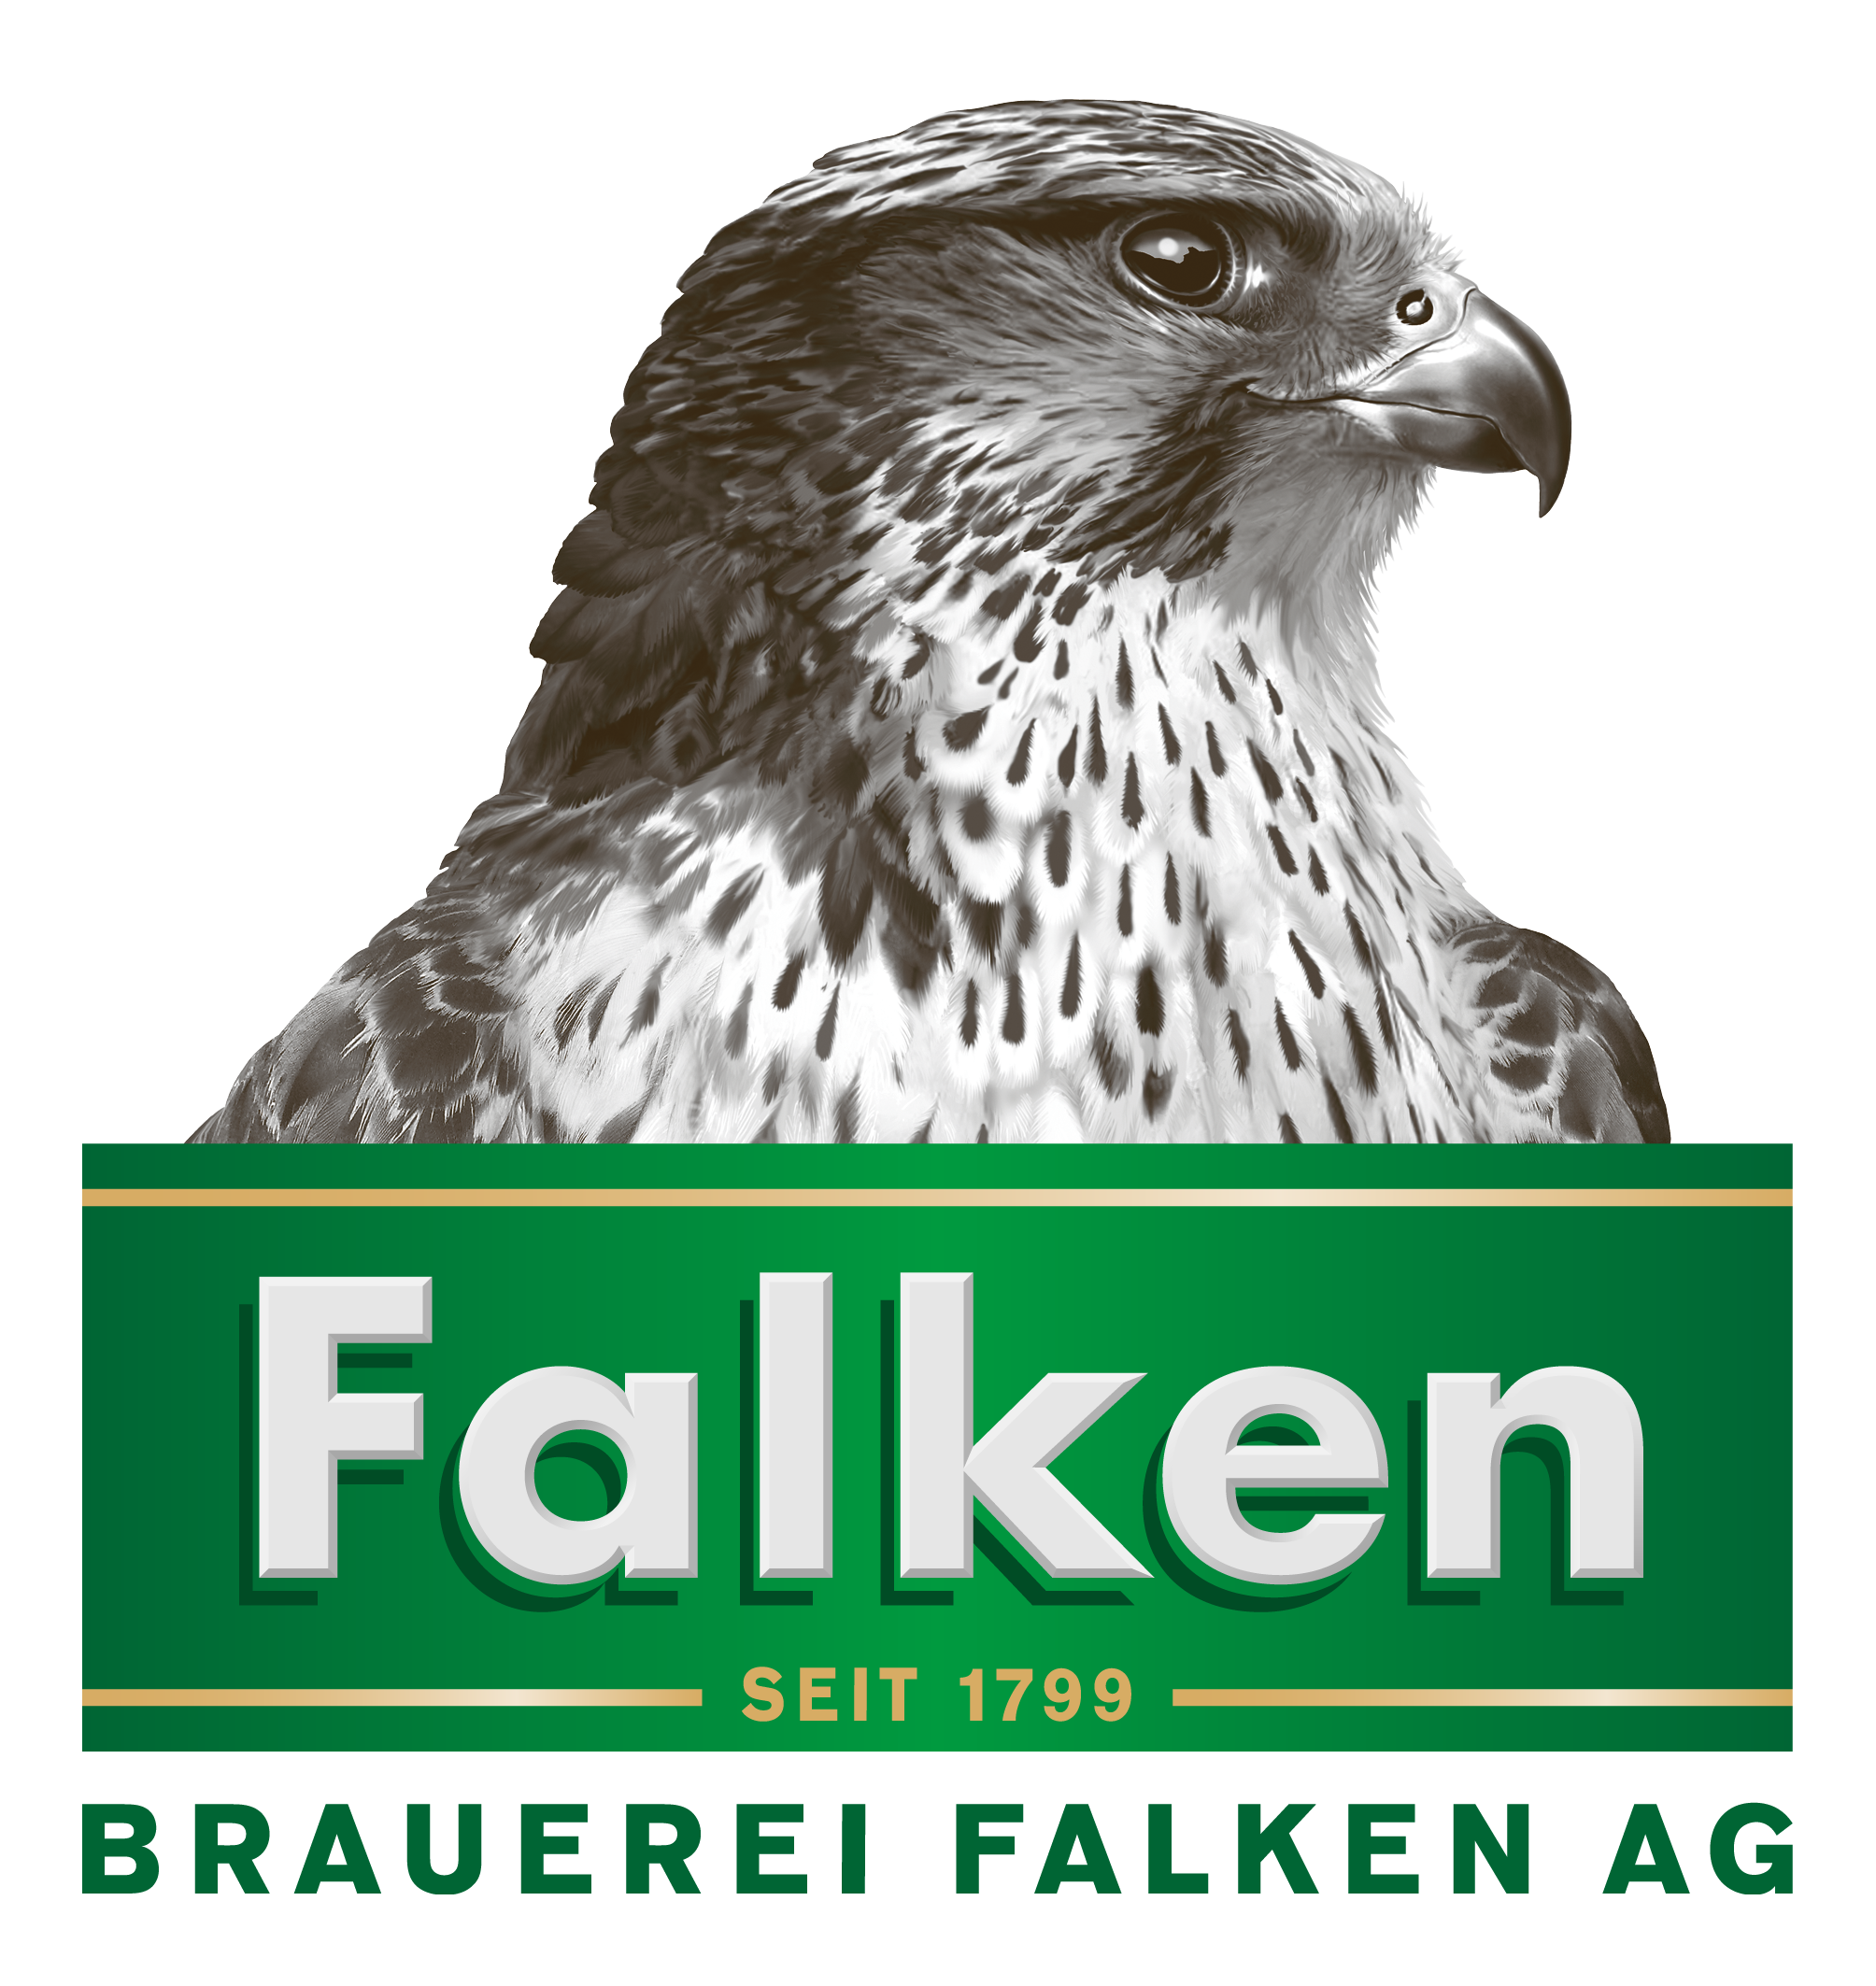 Brauerei Falken